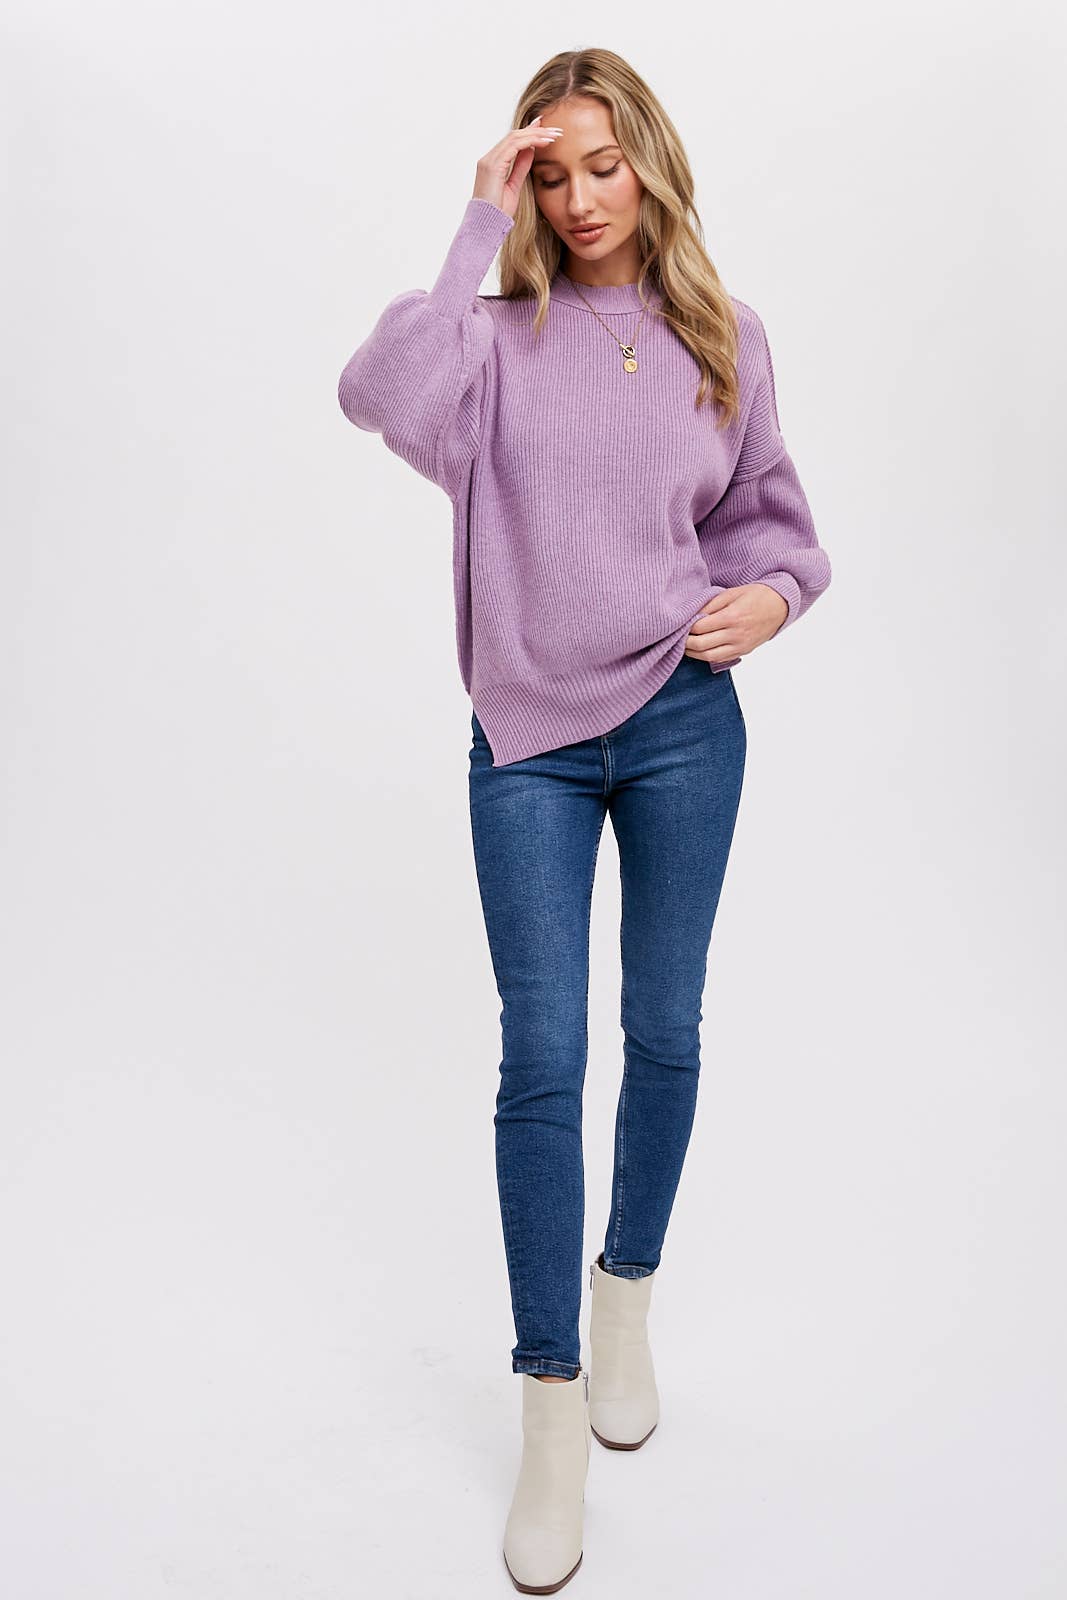 Lavender Haze sweater